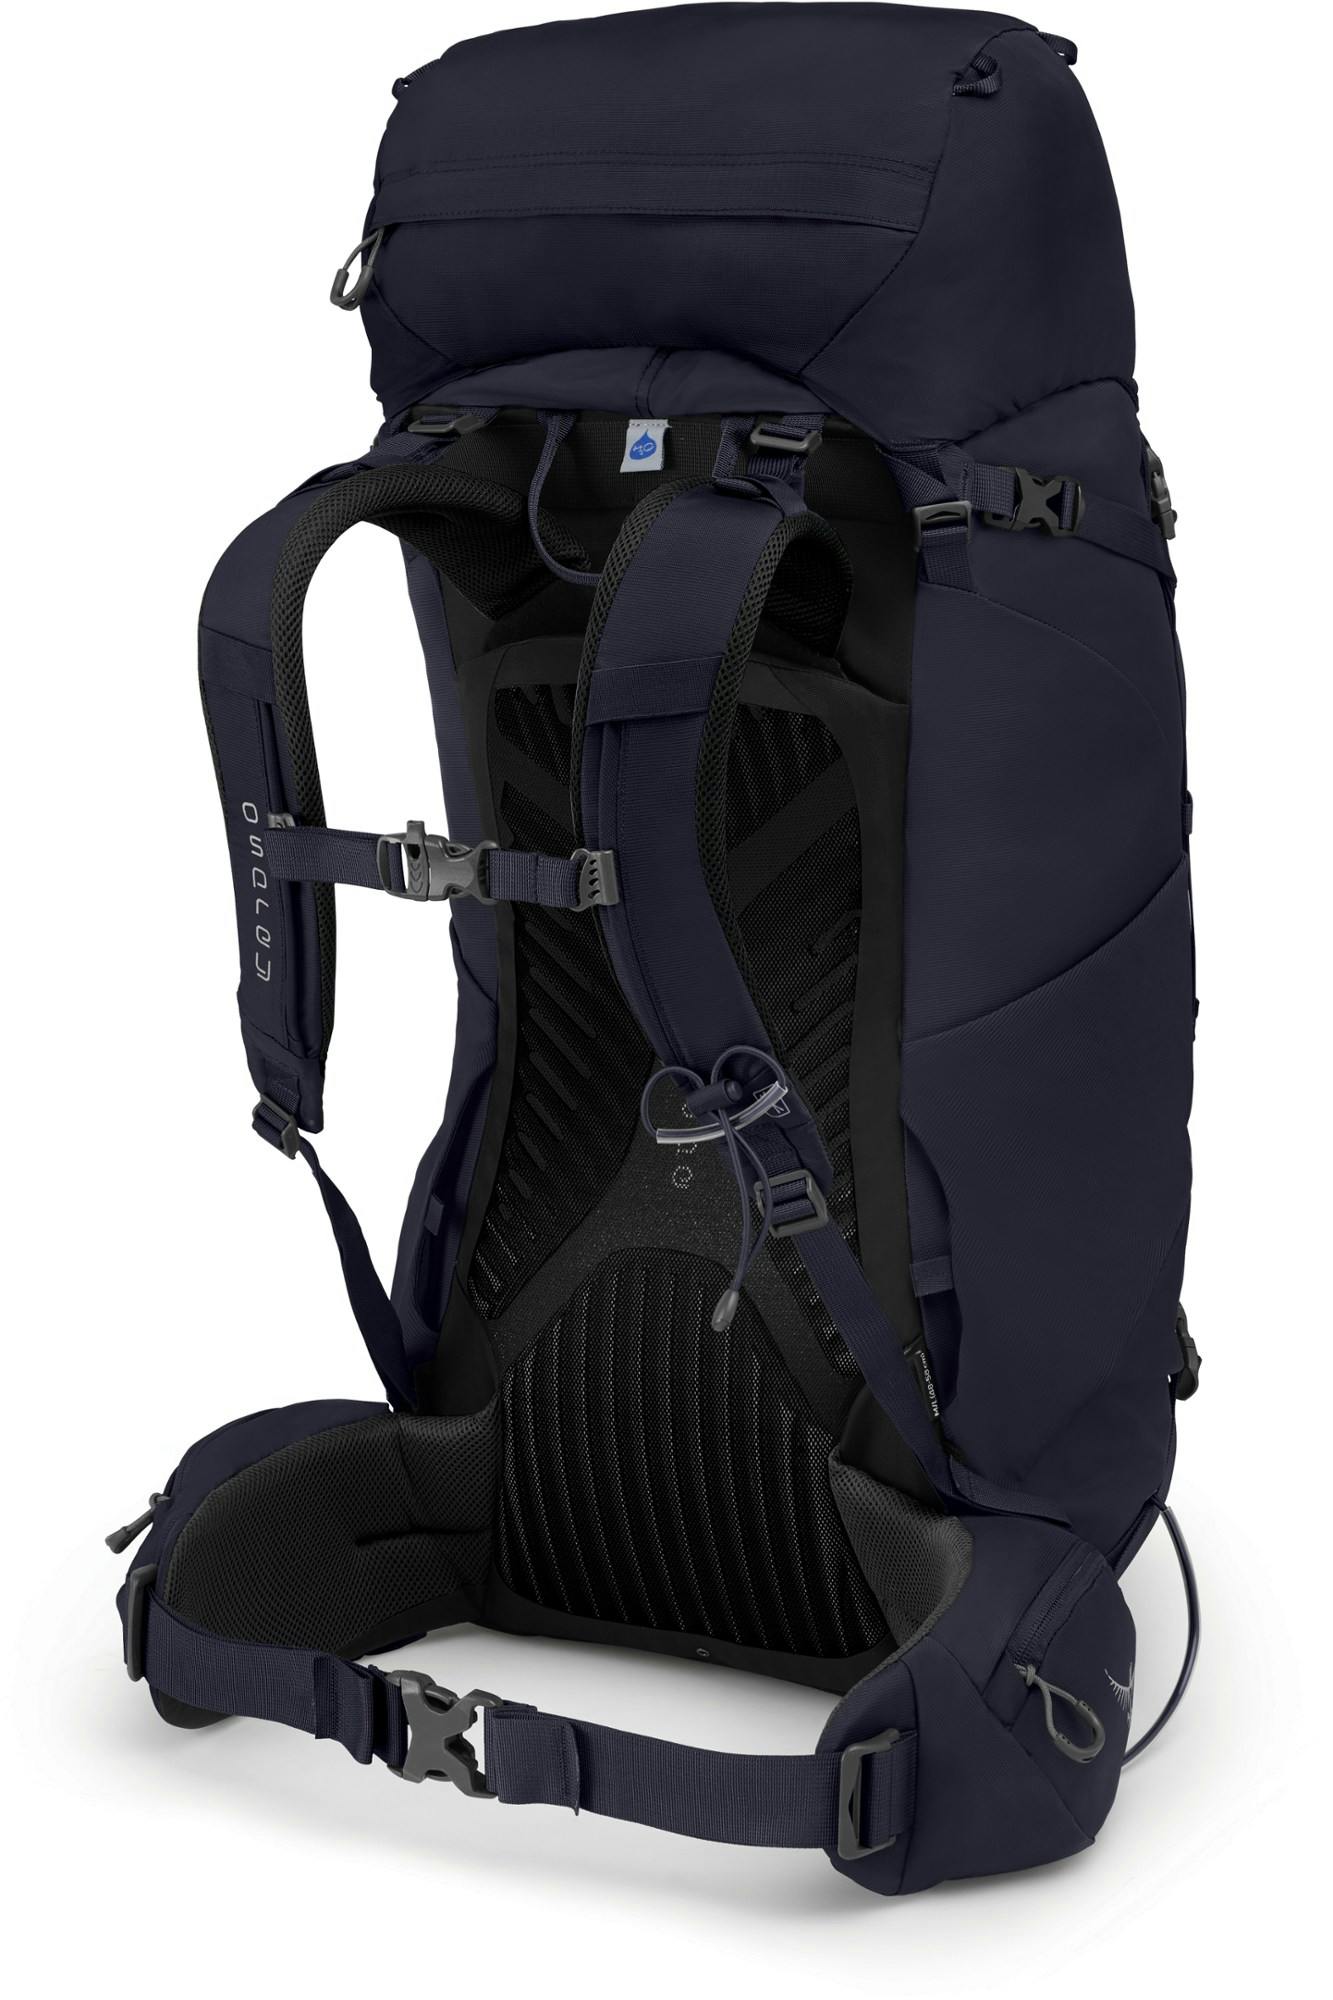 Osprey Kyte 56 Backpack- Women's